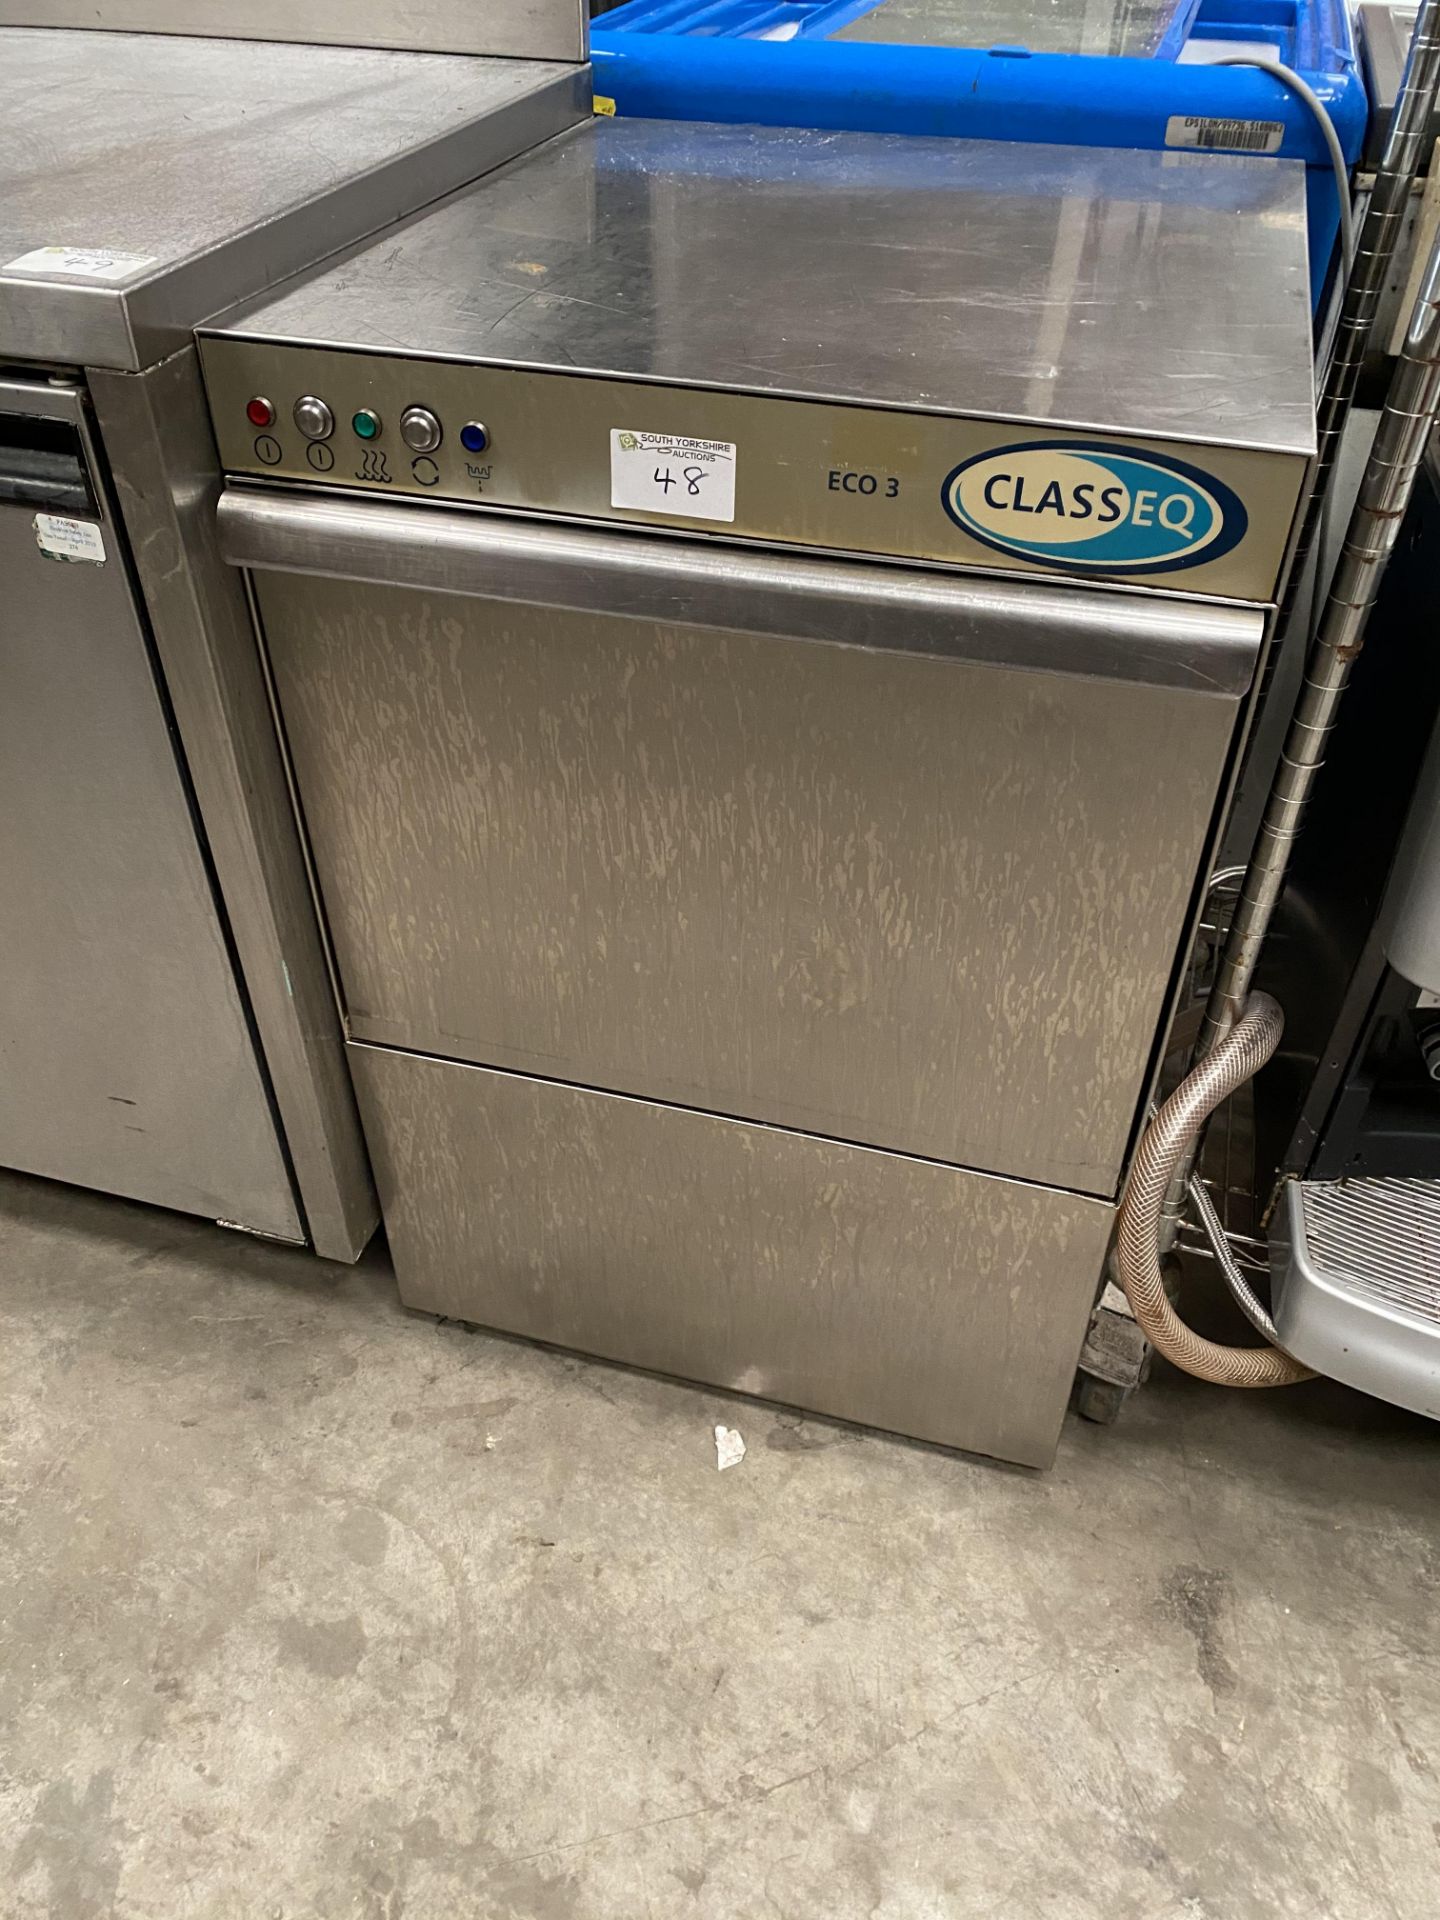 Classeq Eco 3 Undercounter Dishwasher